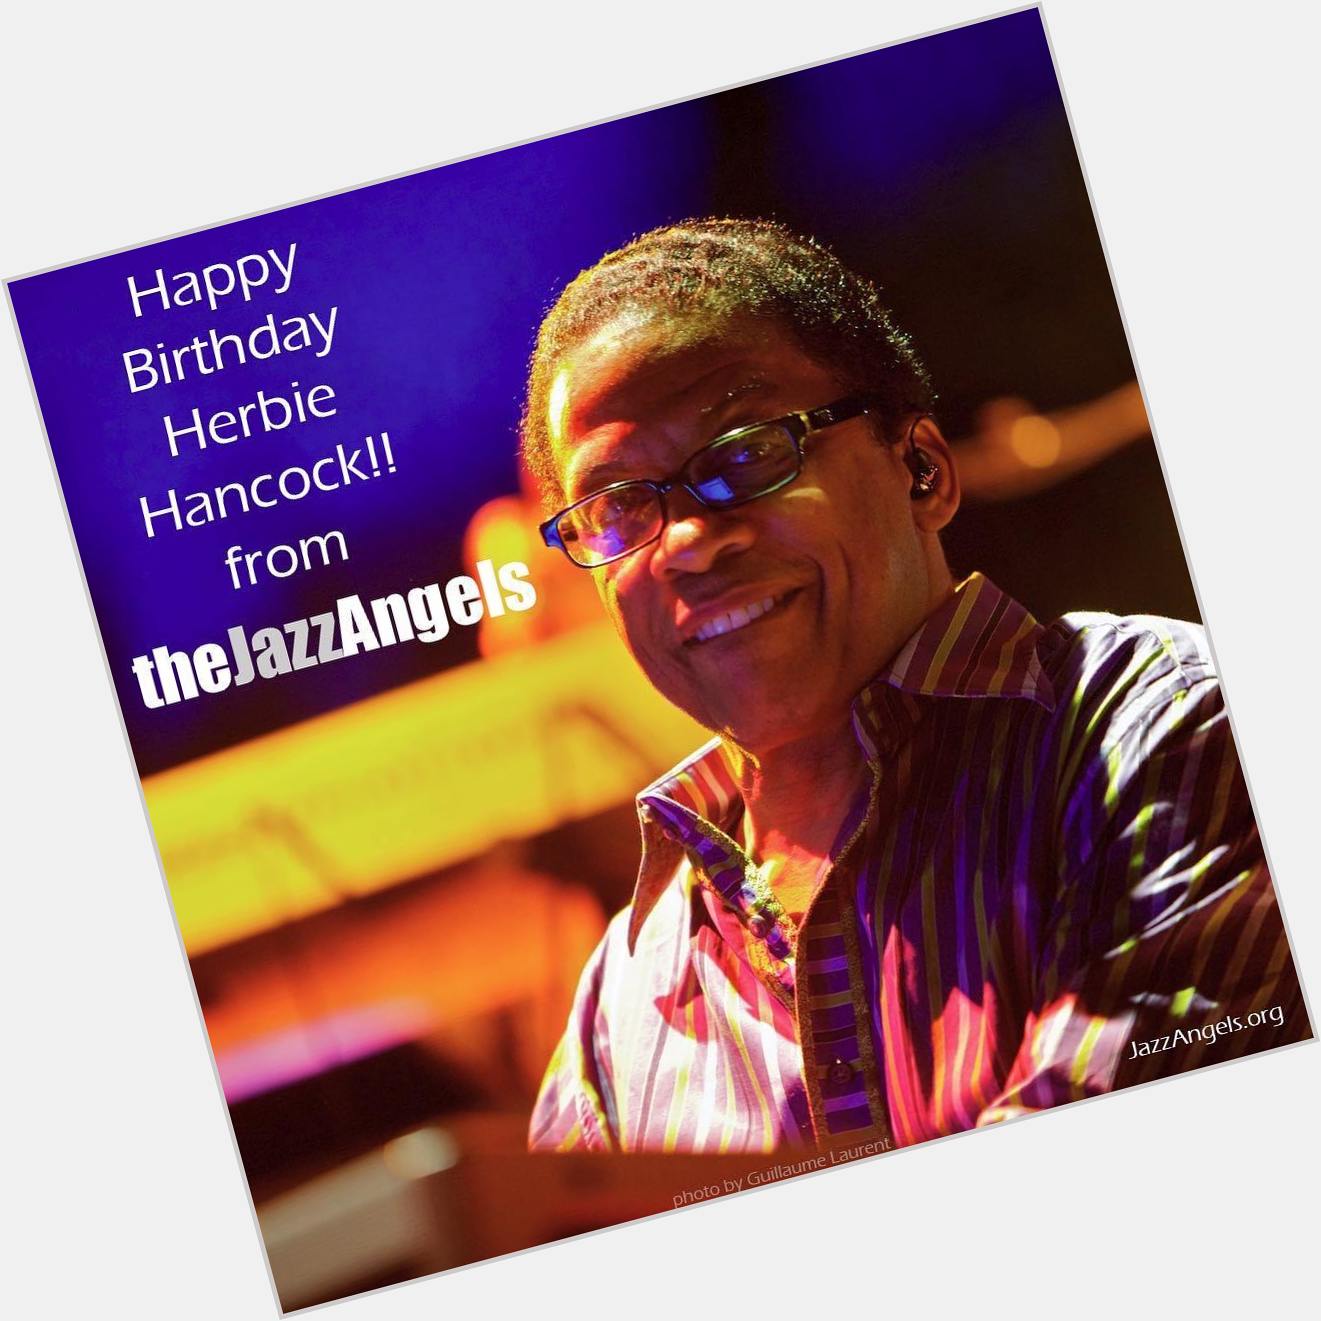 Happy Birthday Herbie Hancock! Come see us perform...  